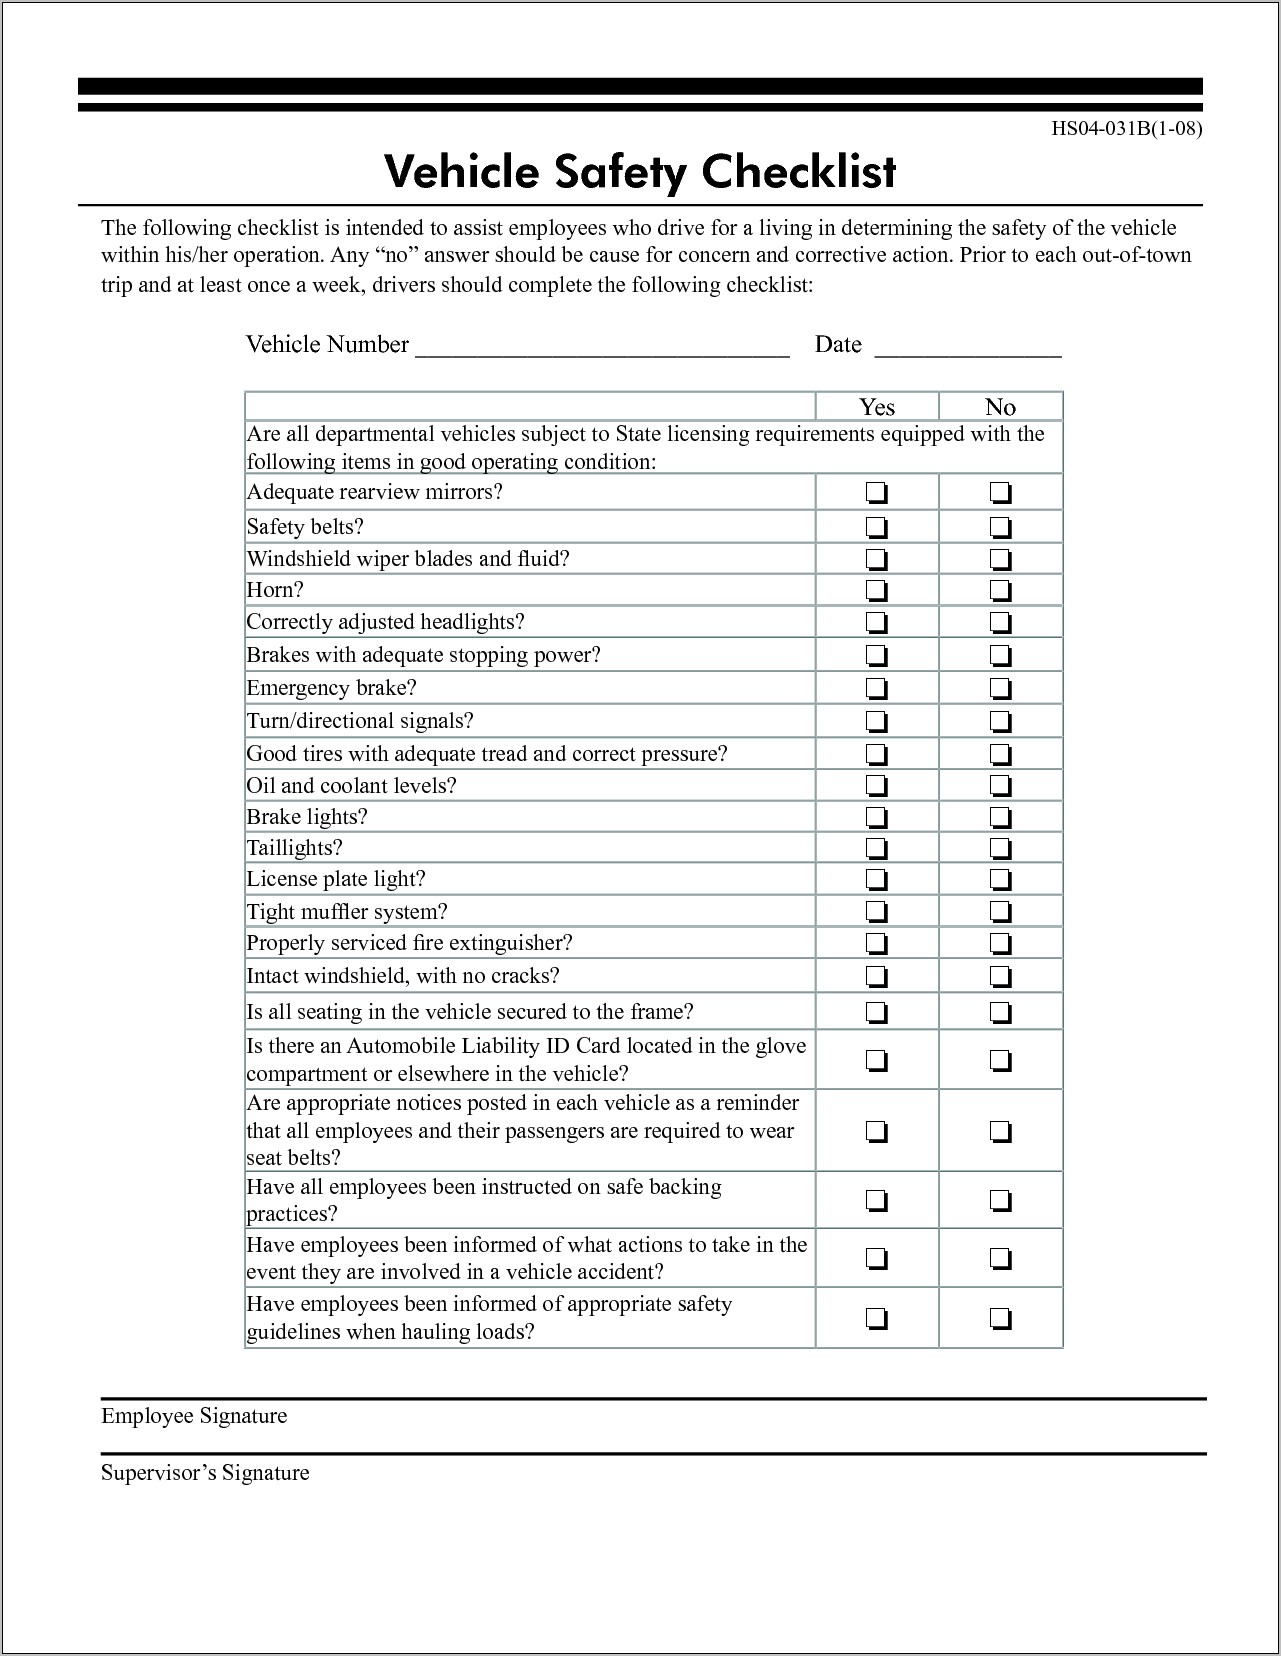 Vehicle Checklist Form Pdf